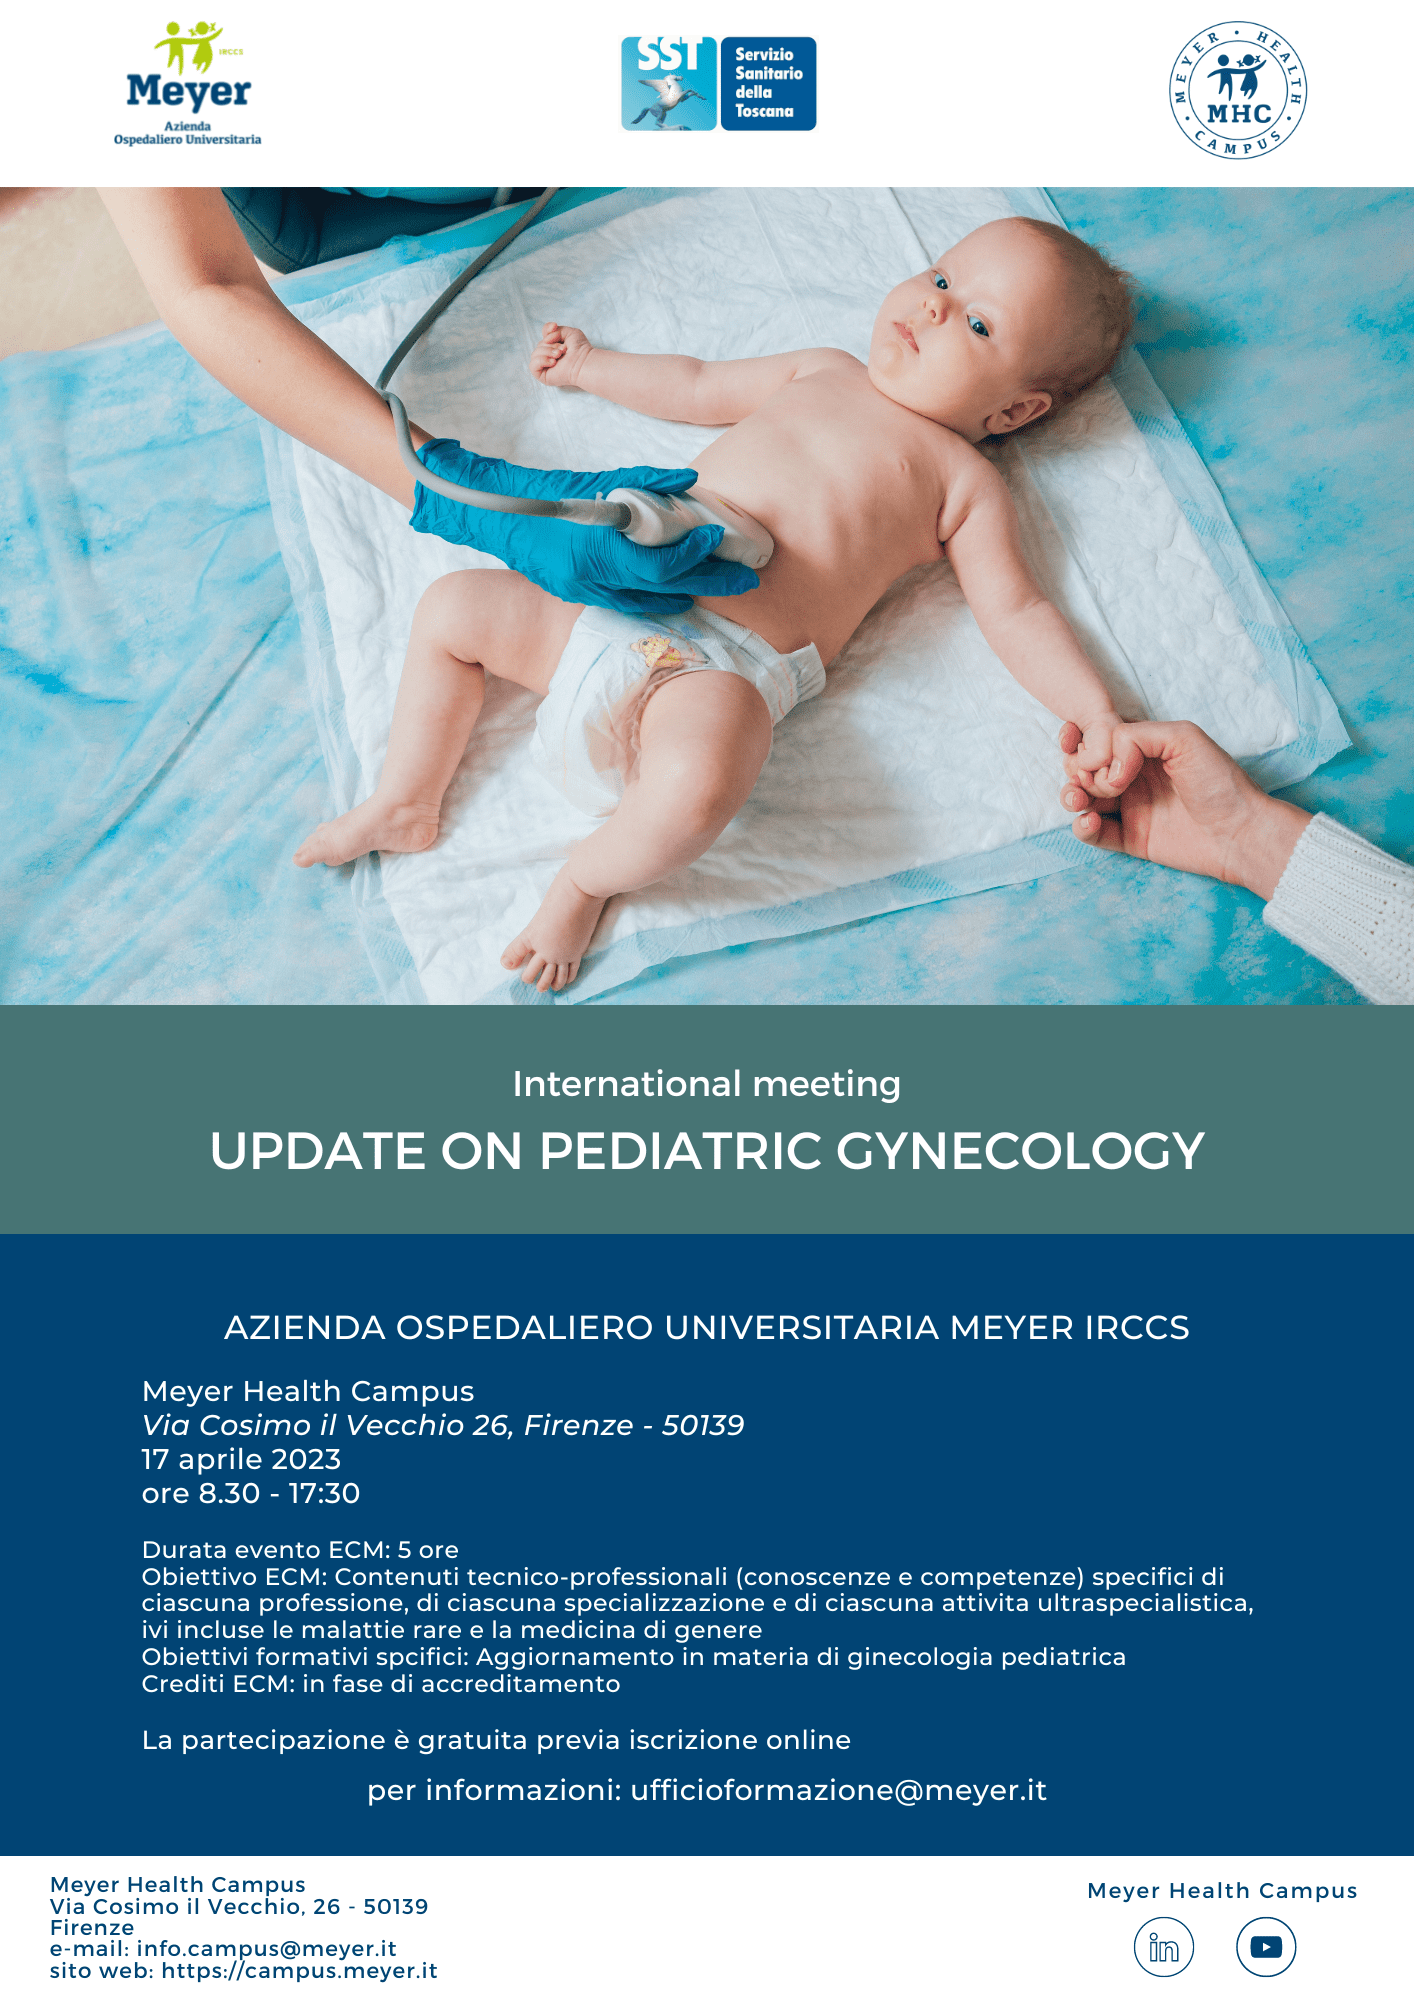 Update on Pediatric Gynecology – International meeting